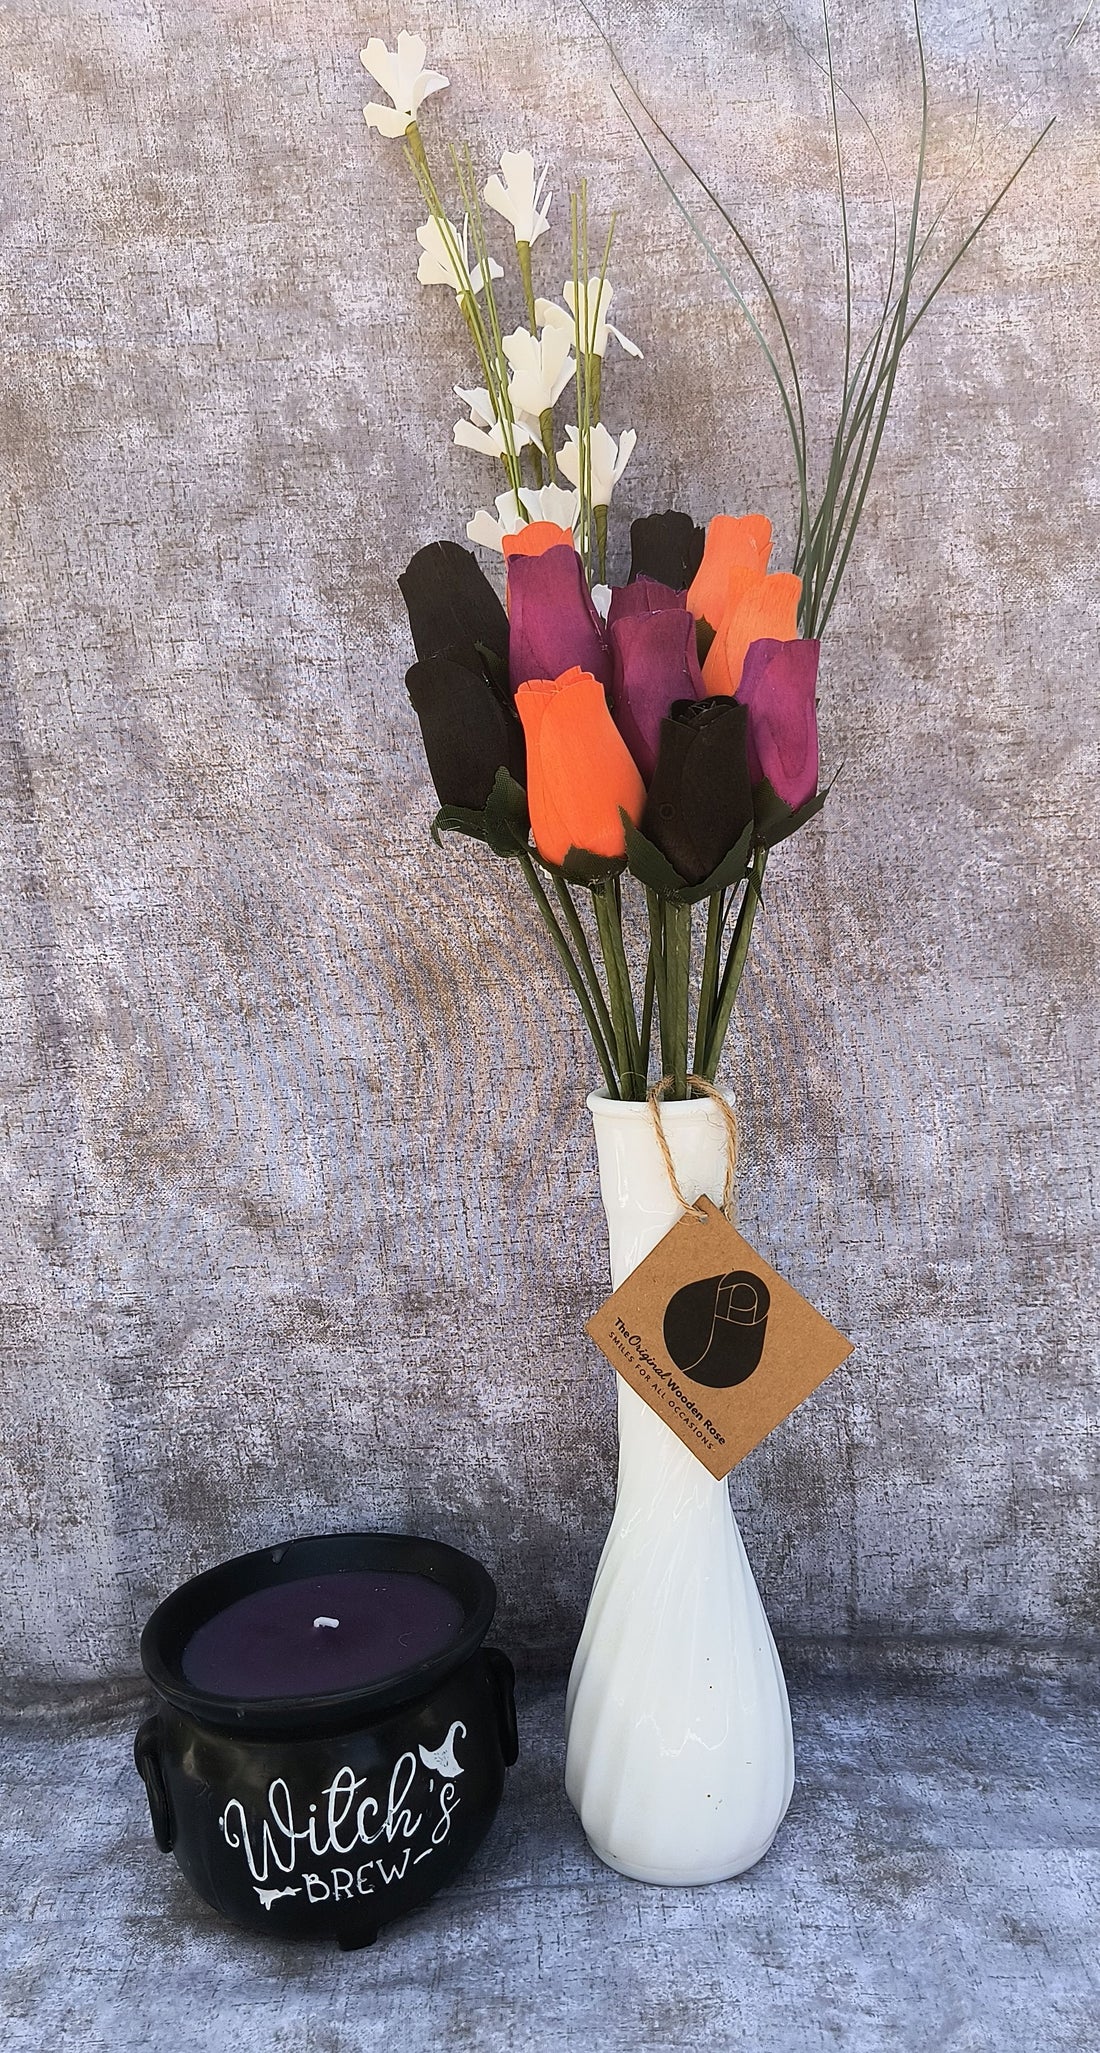 Black, Orange, and Violet Halloween Wooden Rose Flower Bouquet